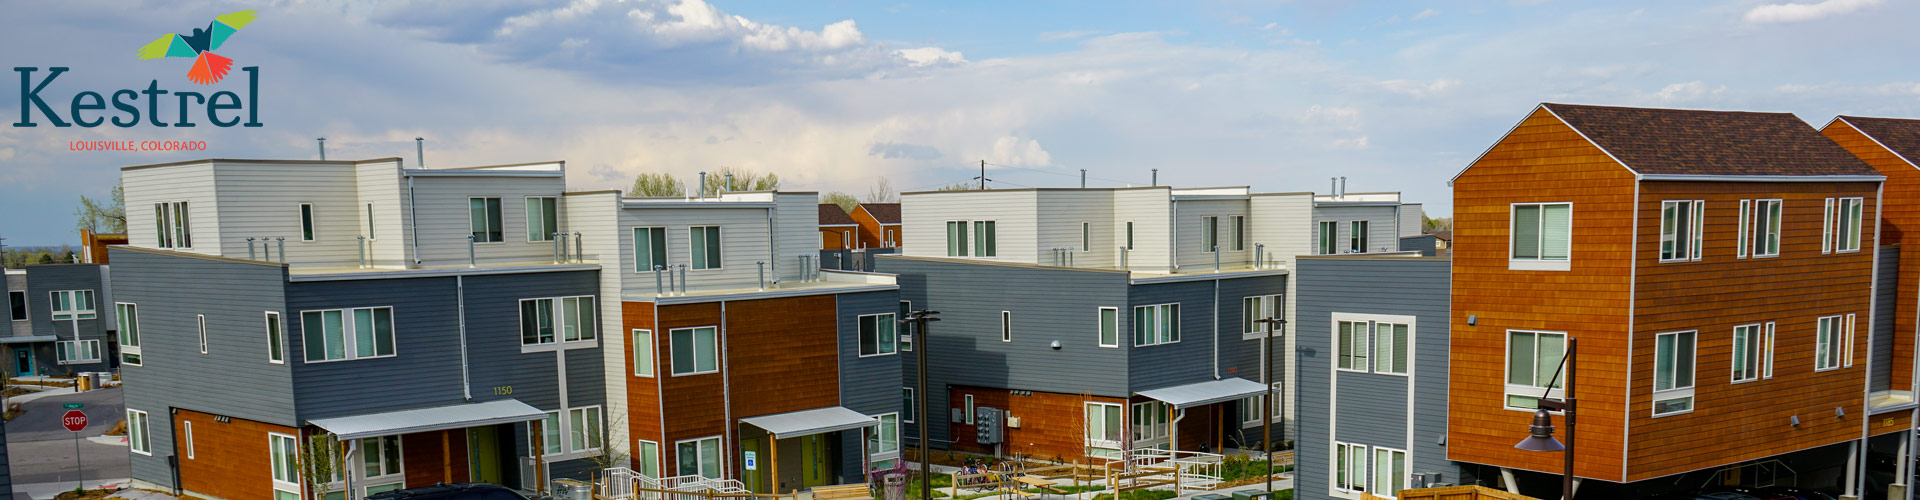 Kestrel Housing Development